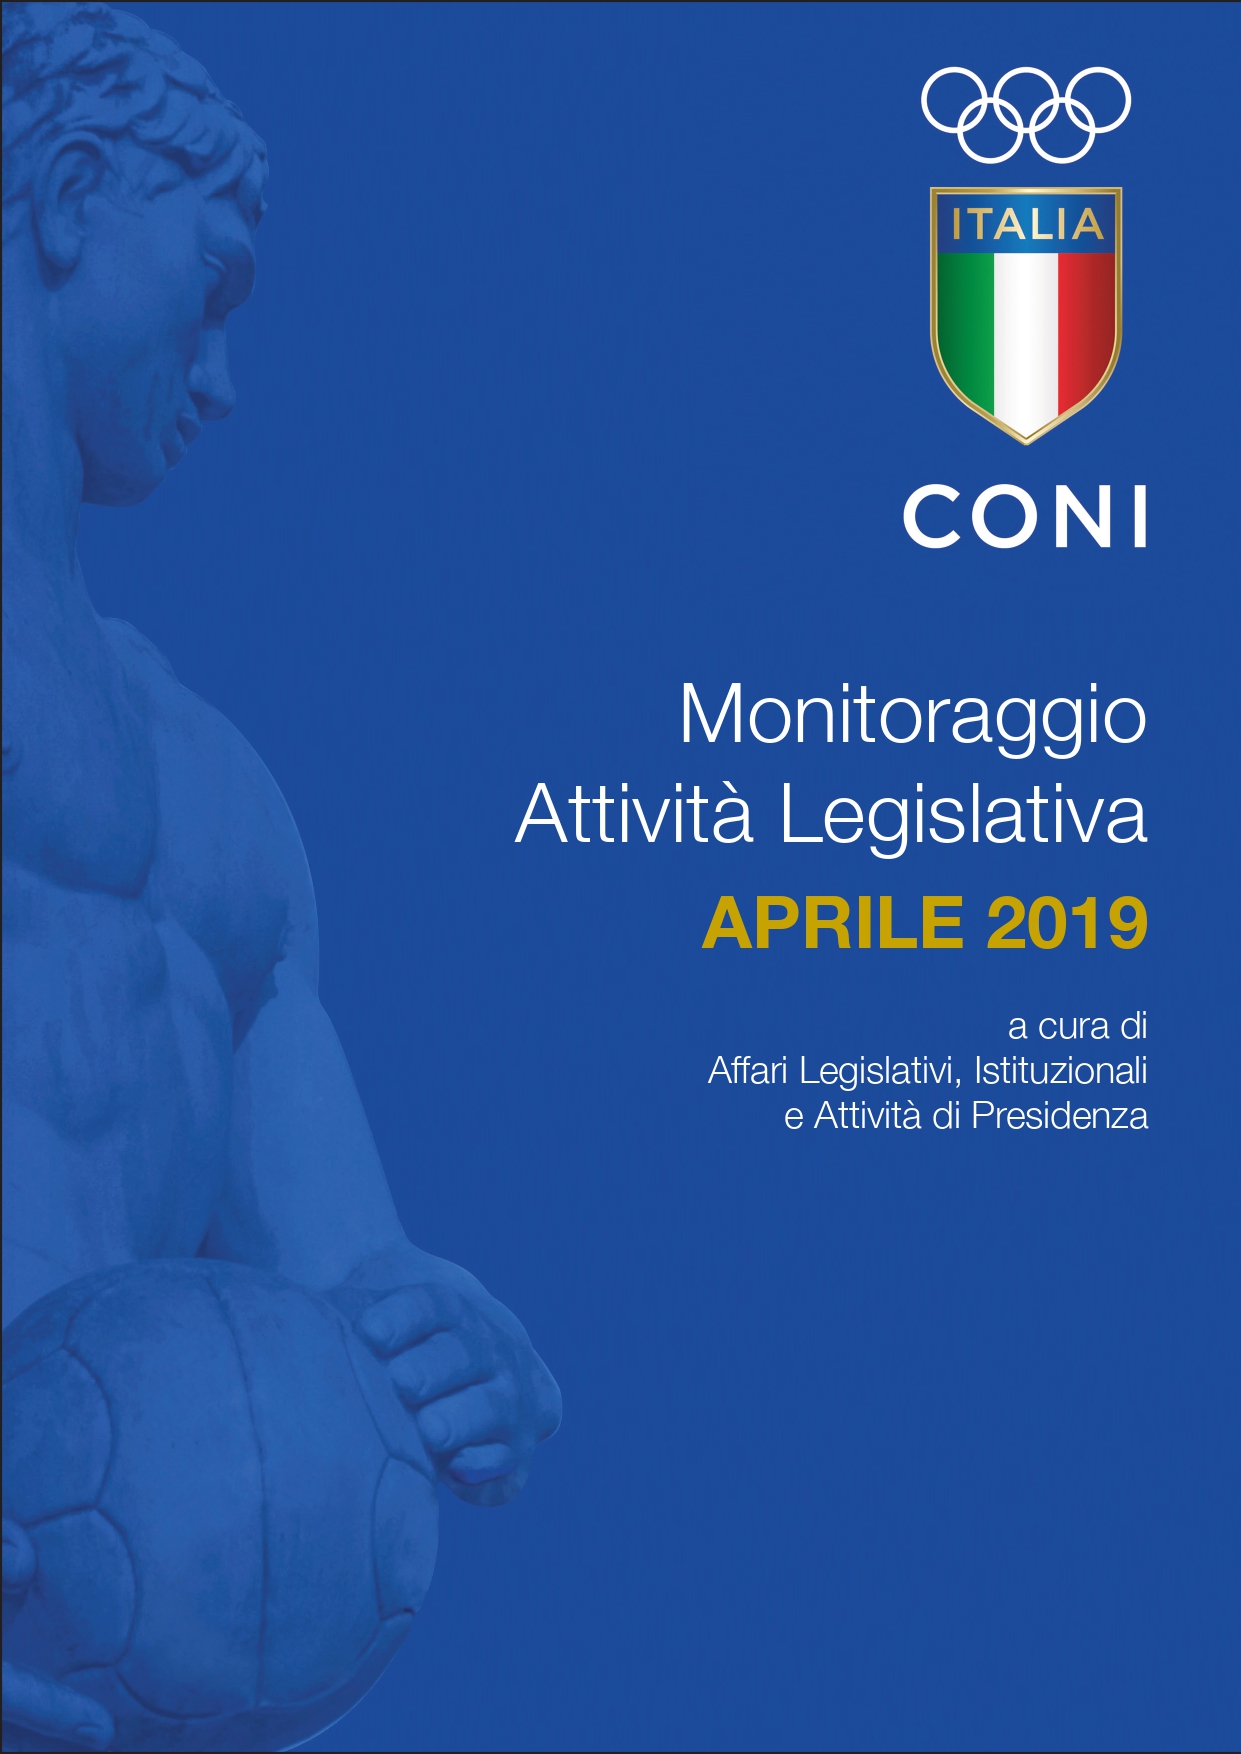 images/News_2019/Monitoraggio_Att.Legislativa_2019/Monitoraggio_attività_legislativa_4-2019.jpg